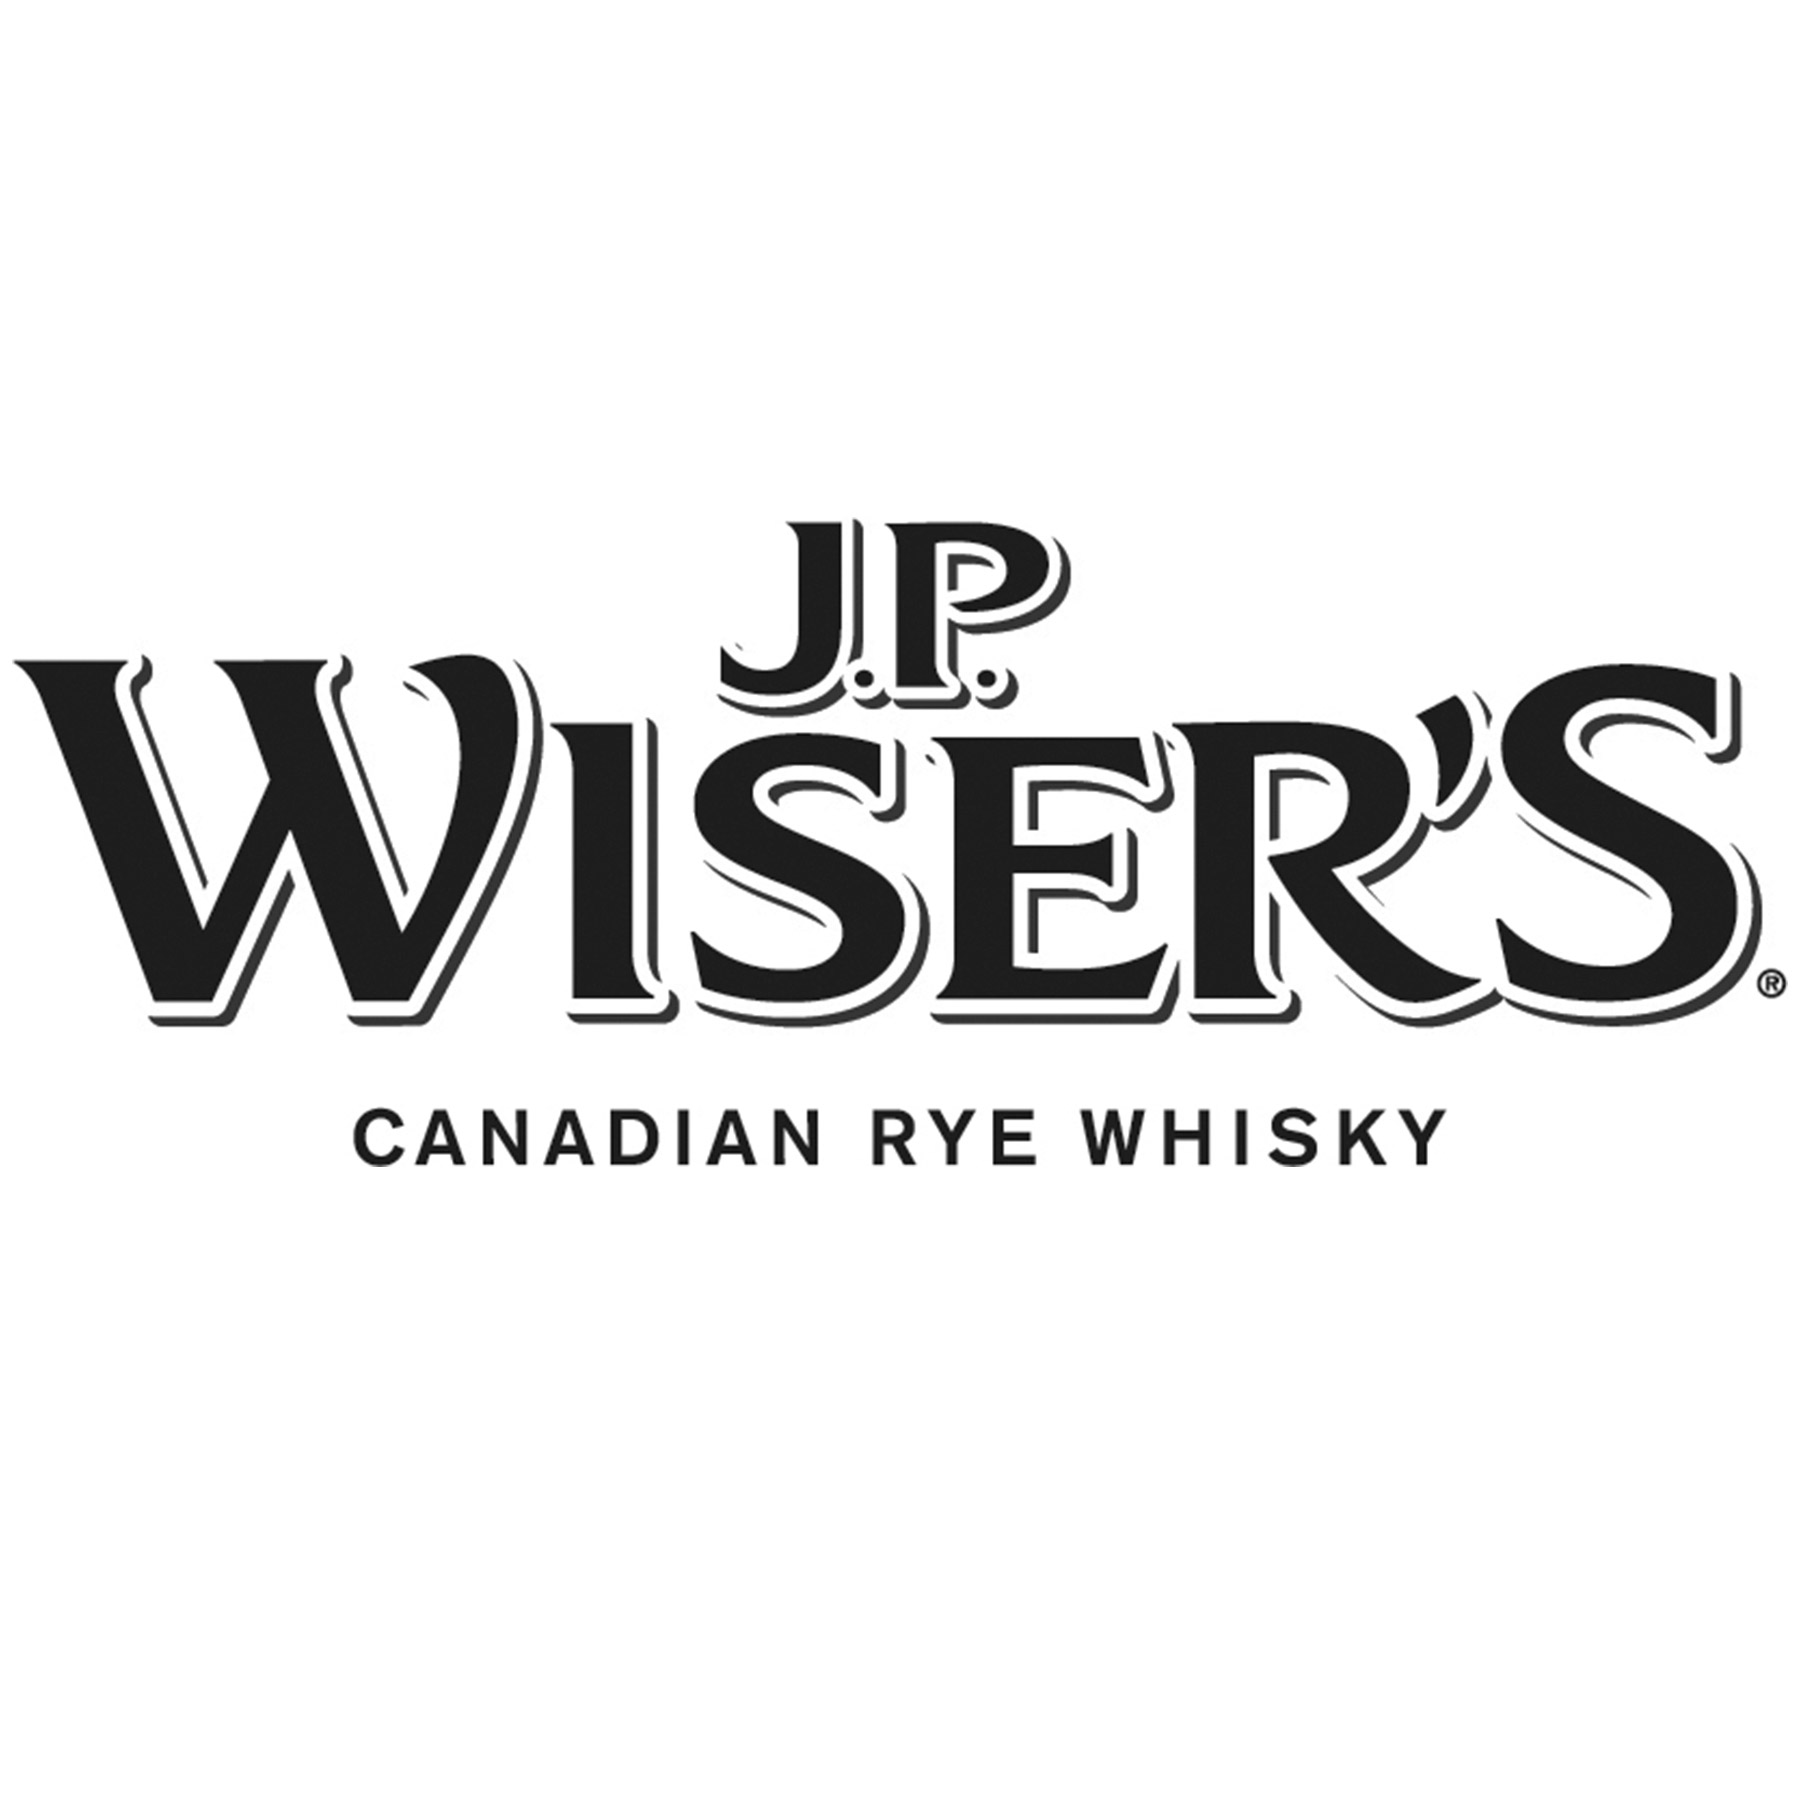 JP-Wisers-new19-B&W.jpg